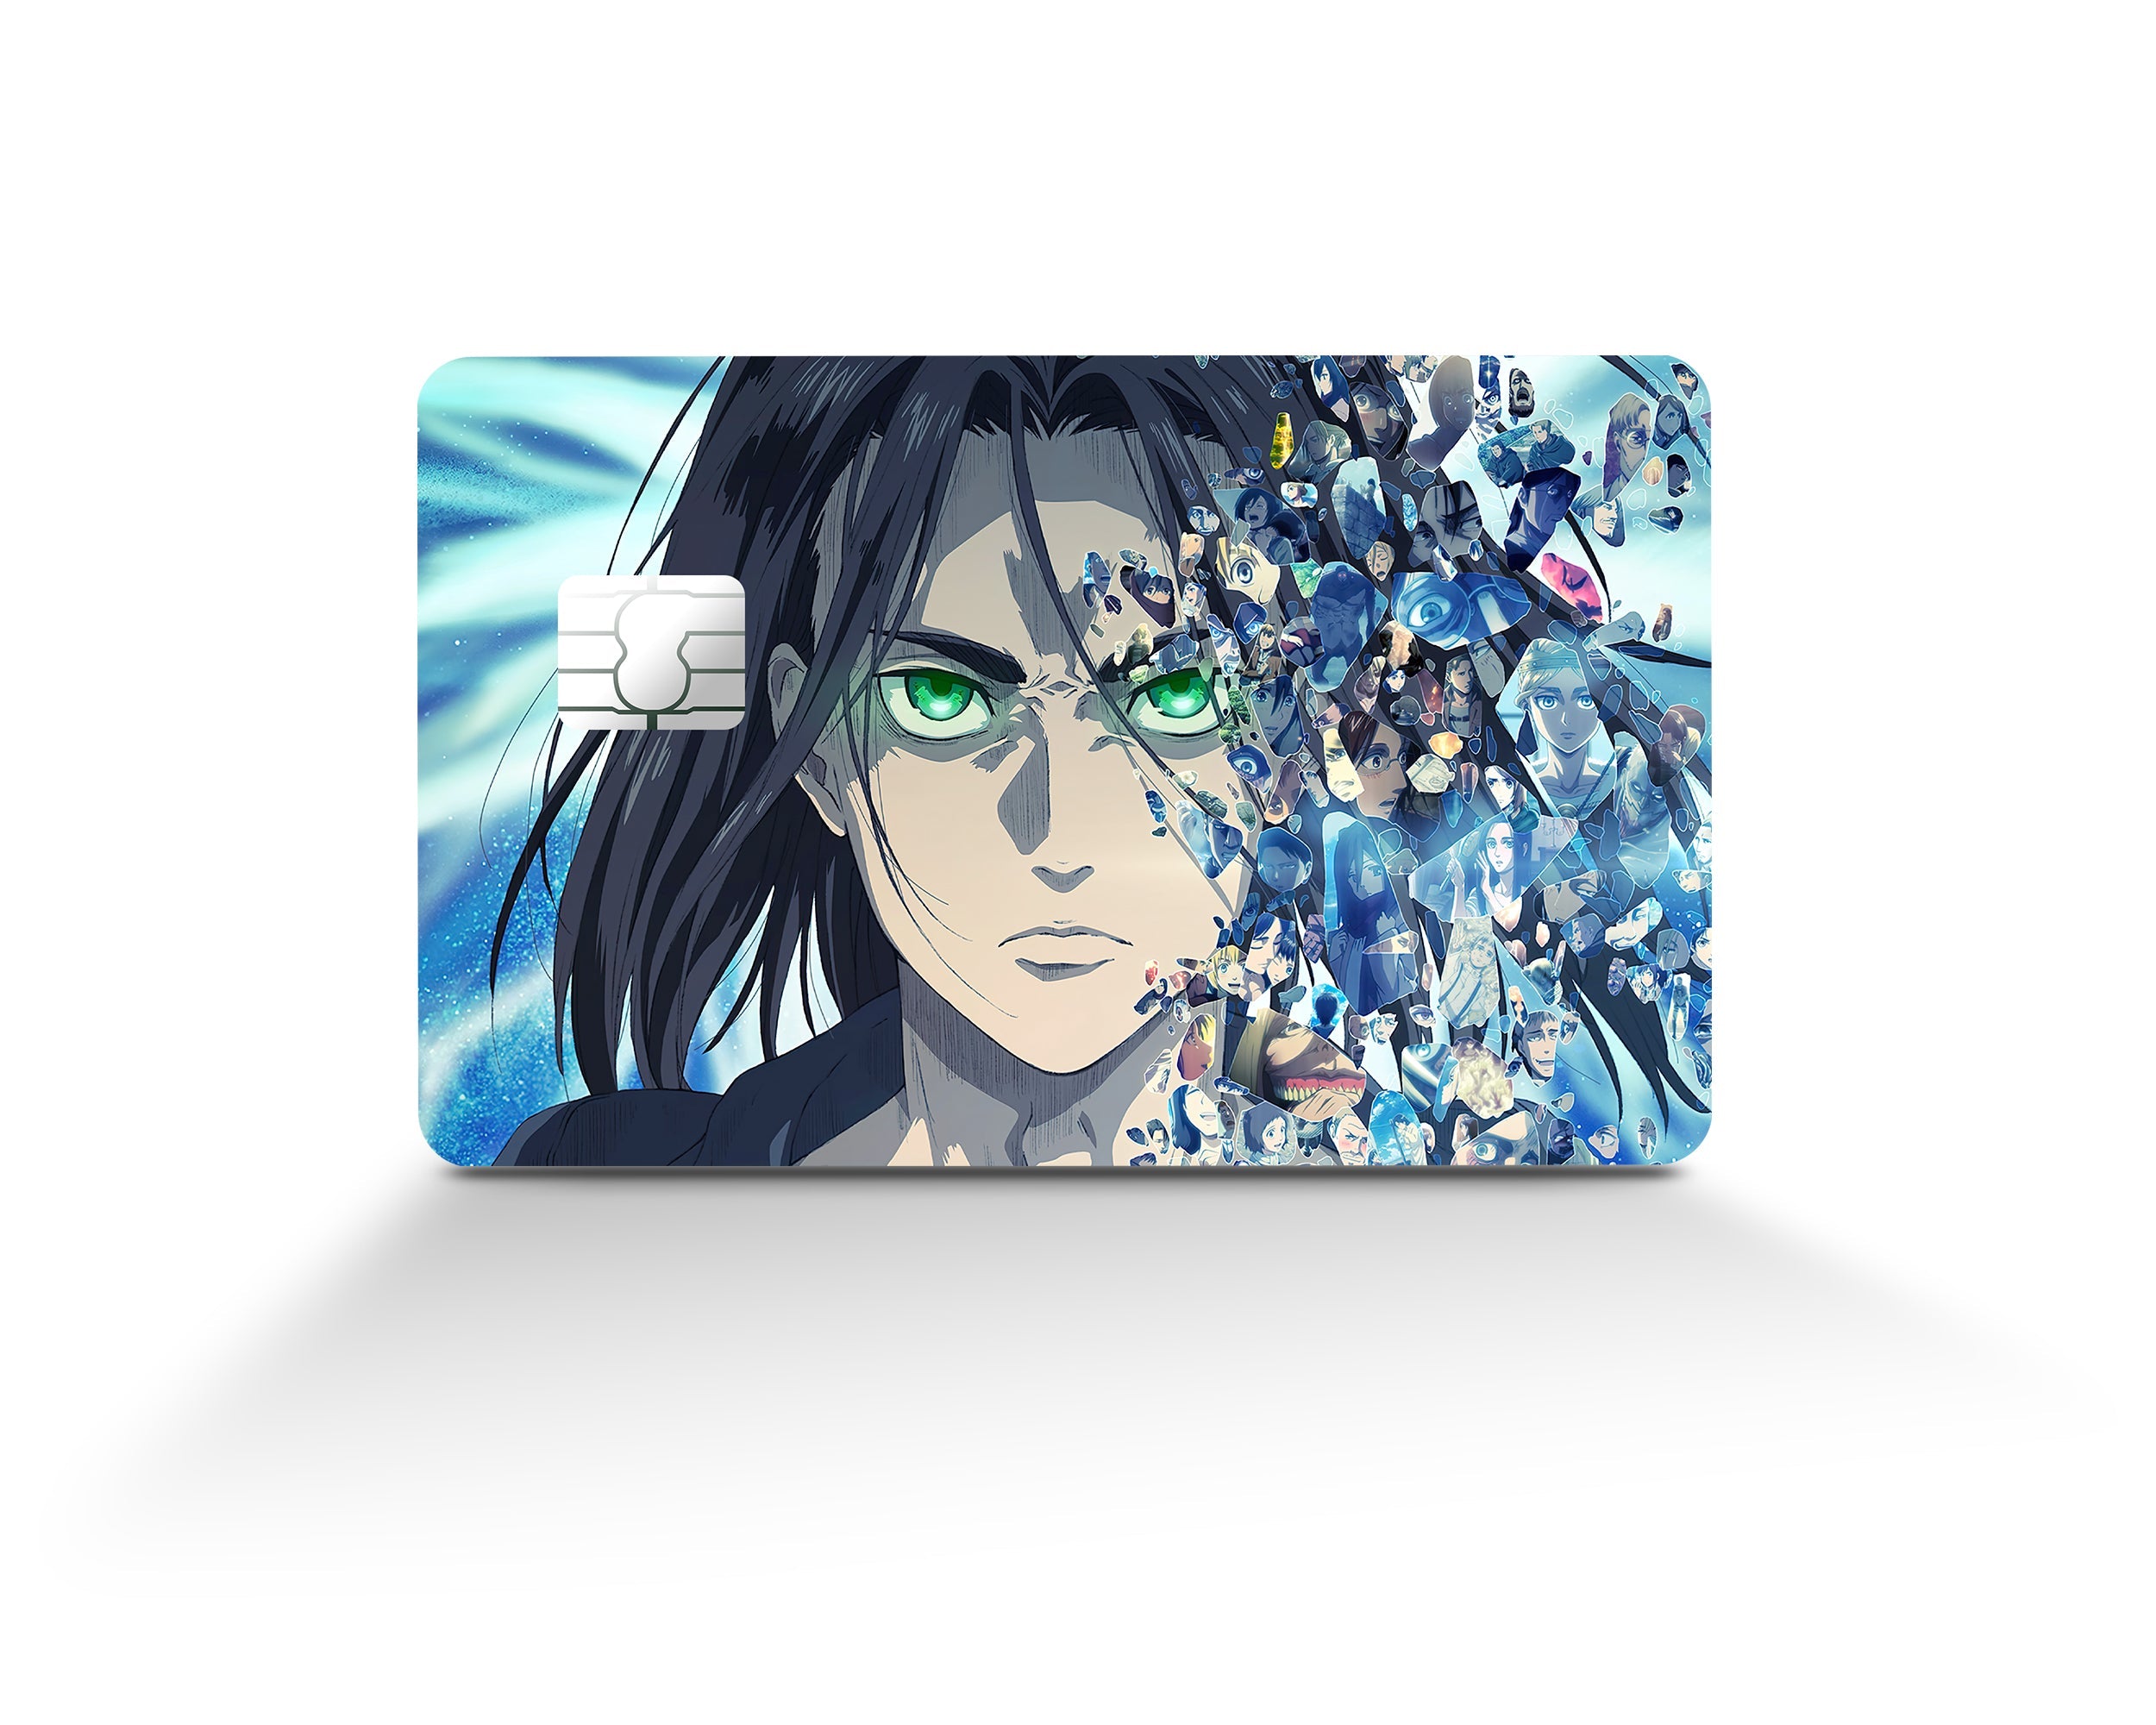 Mindful  Anime  Credit Card Sticker  Credit Card Skin   eBay